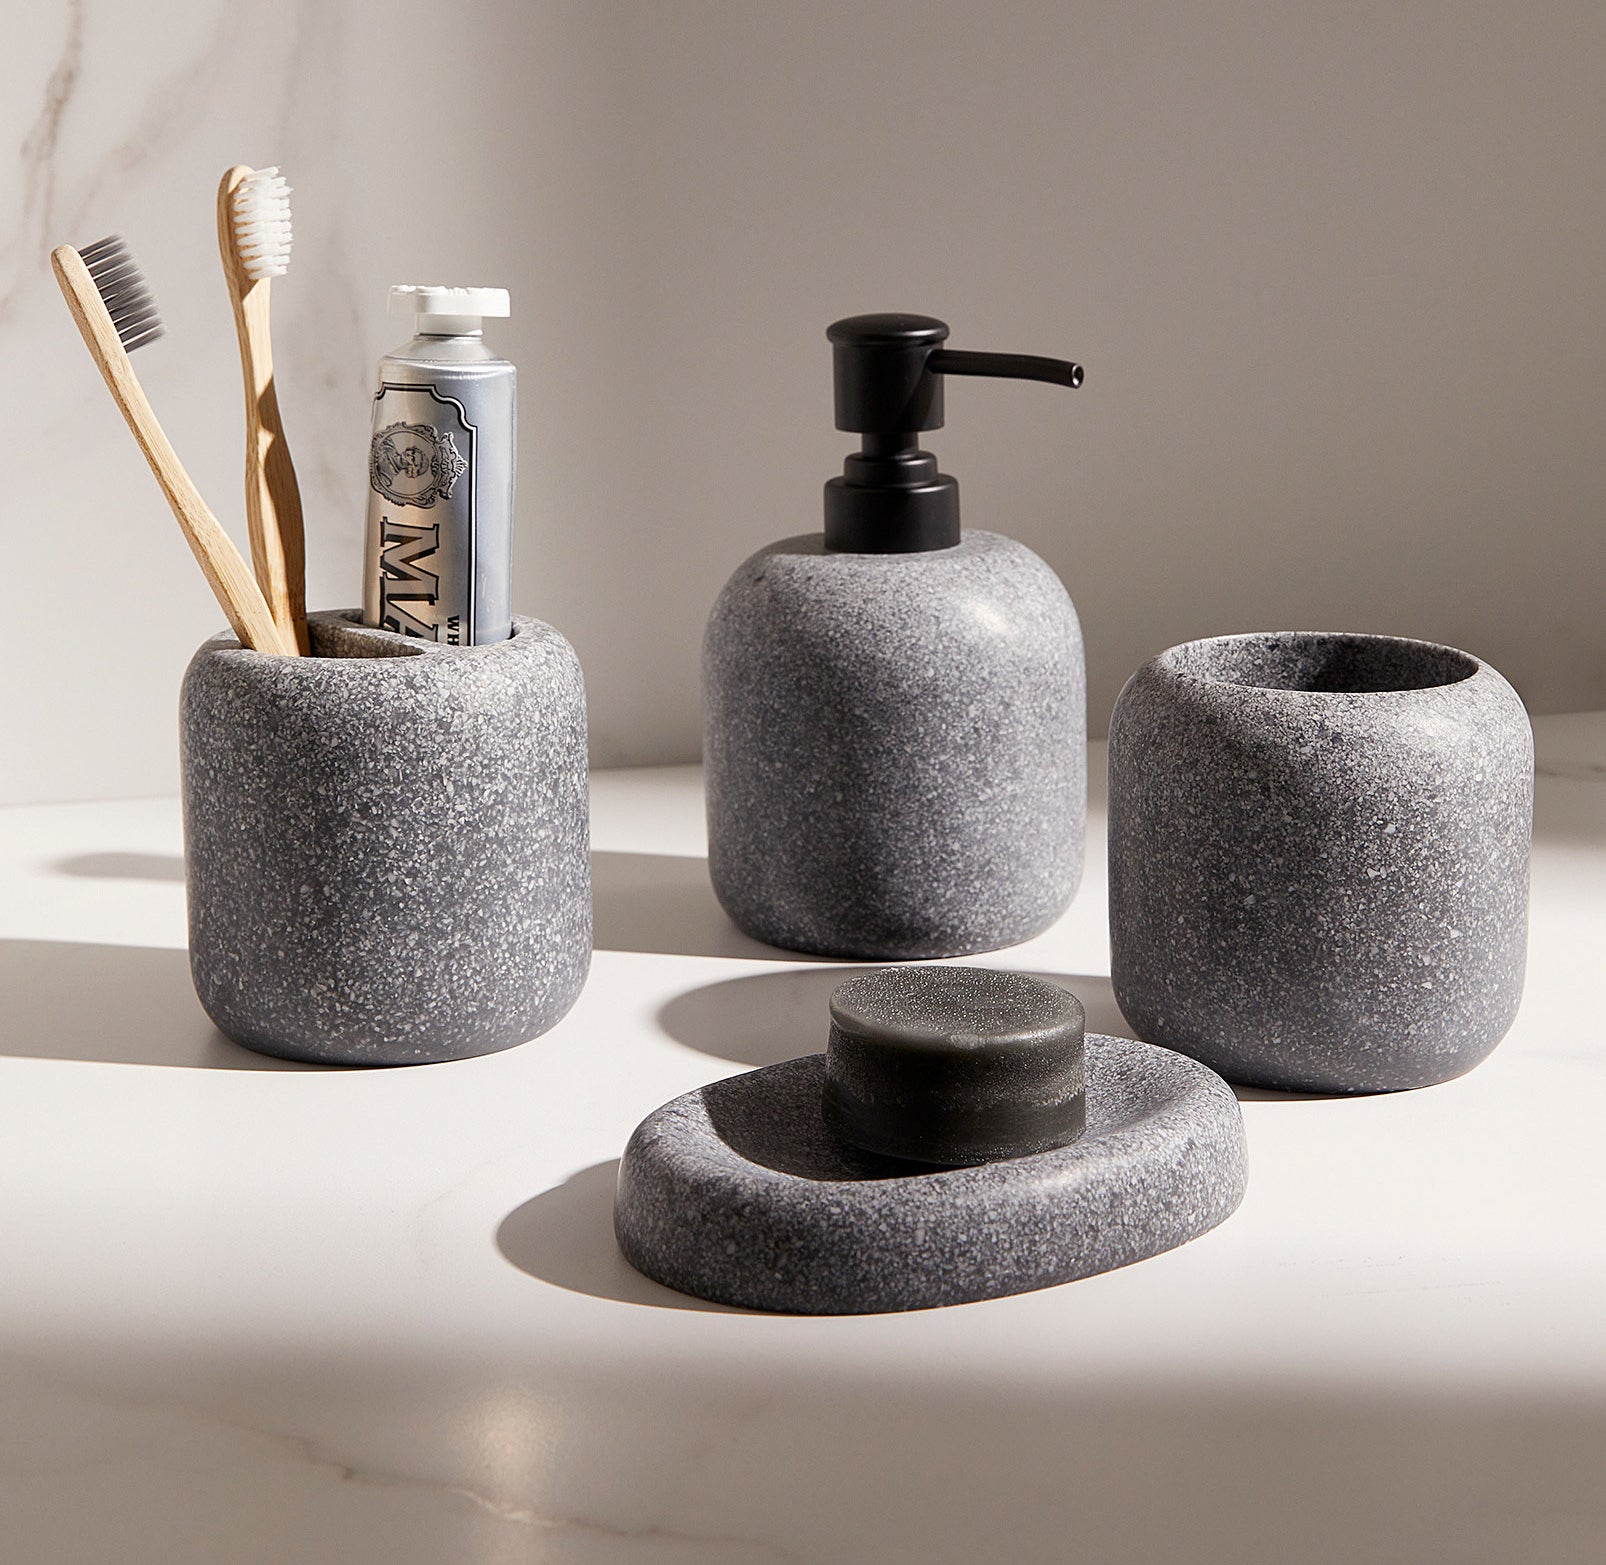 a four piece set of stone-like bathroom accessories